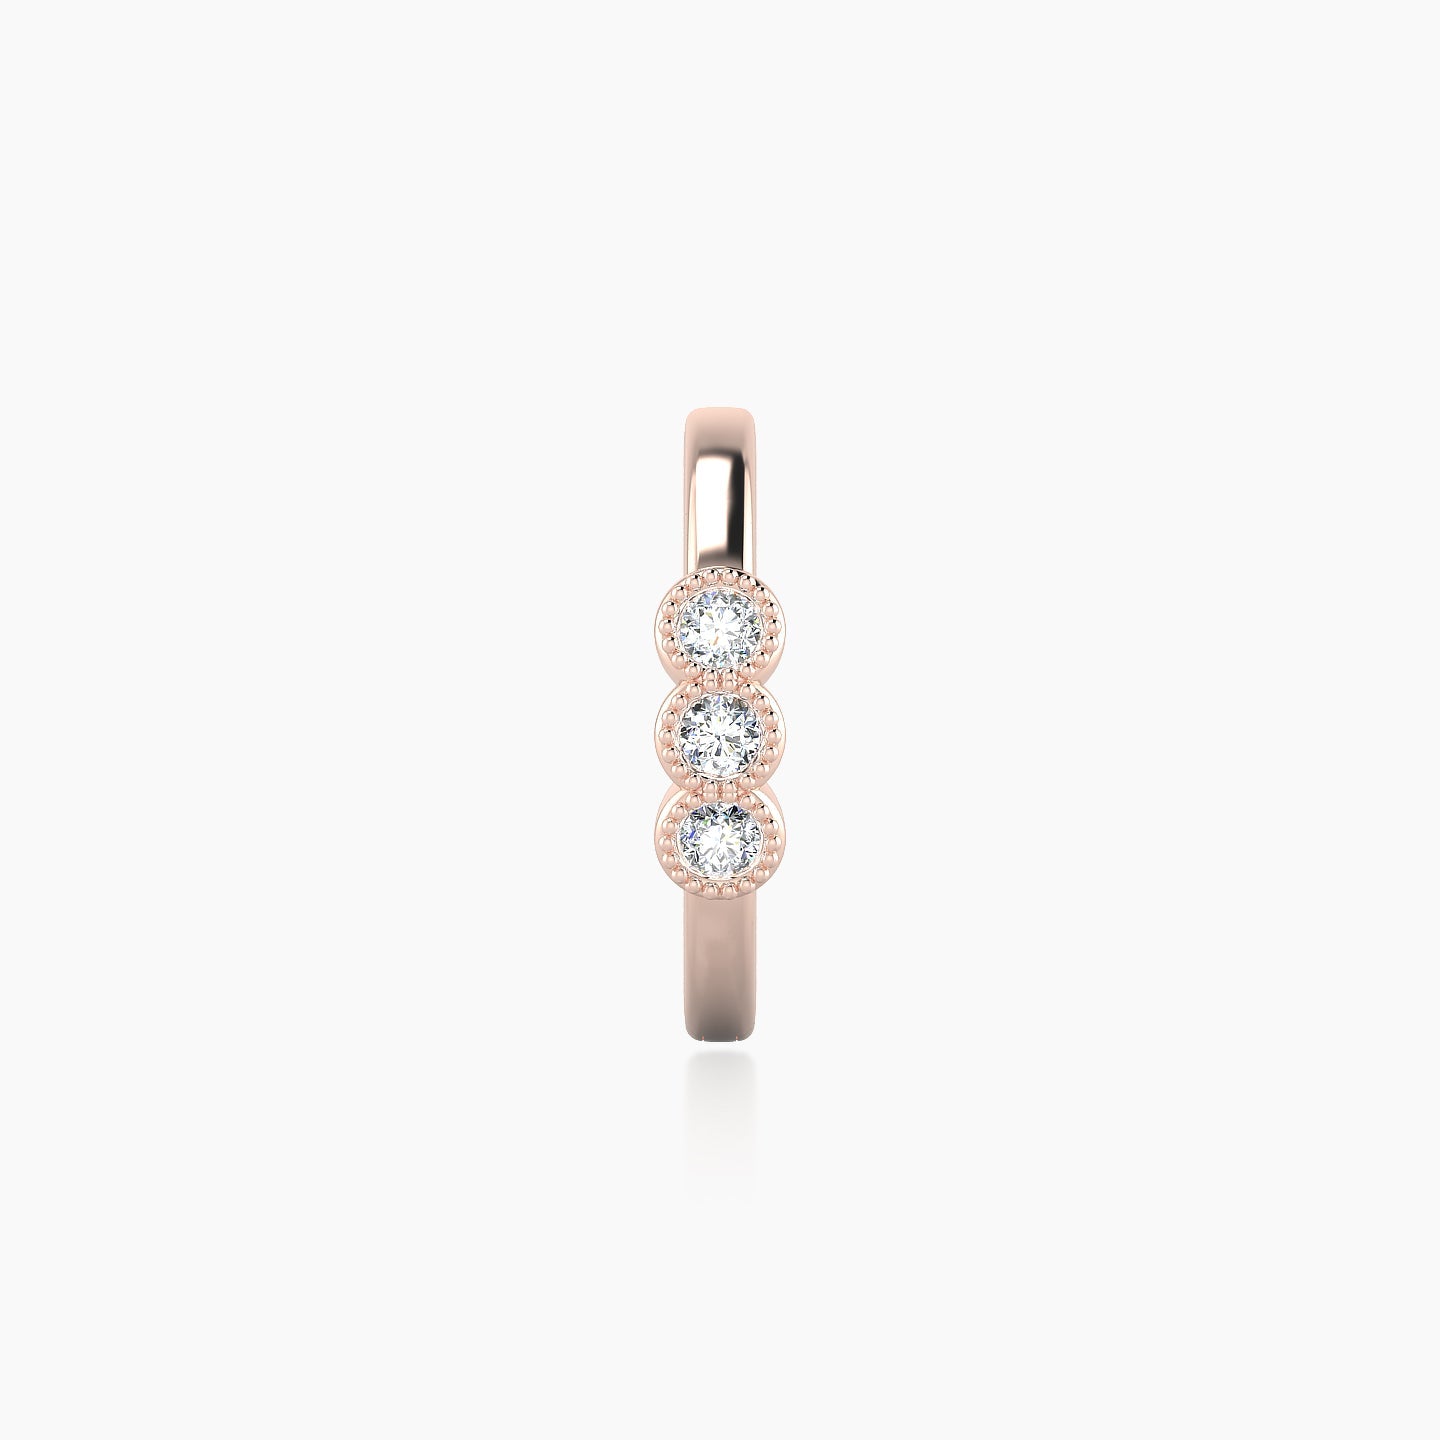 Irene | 18k Rose Gold 9.5 mm Trilogy Diamond Nose Ring Piercing